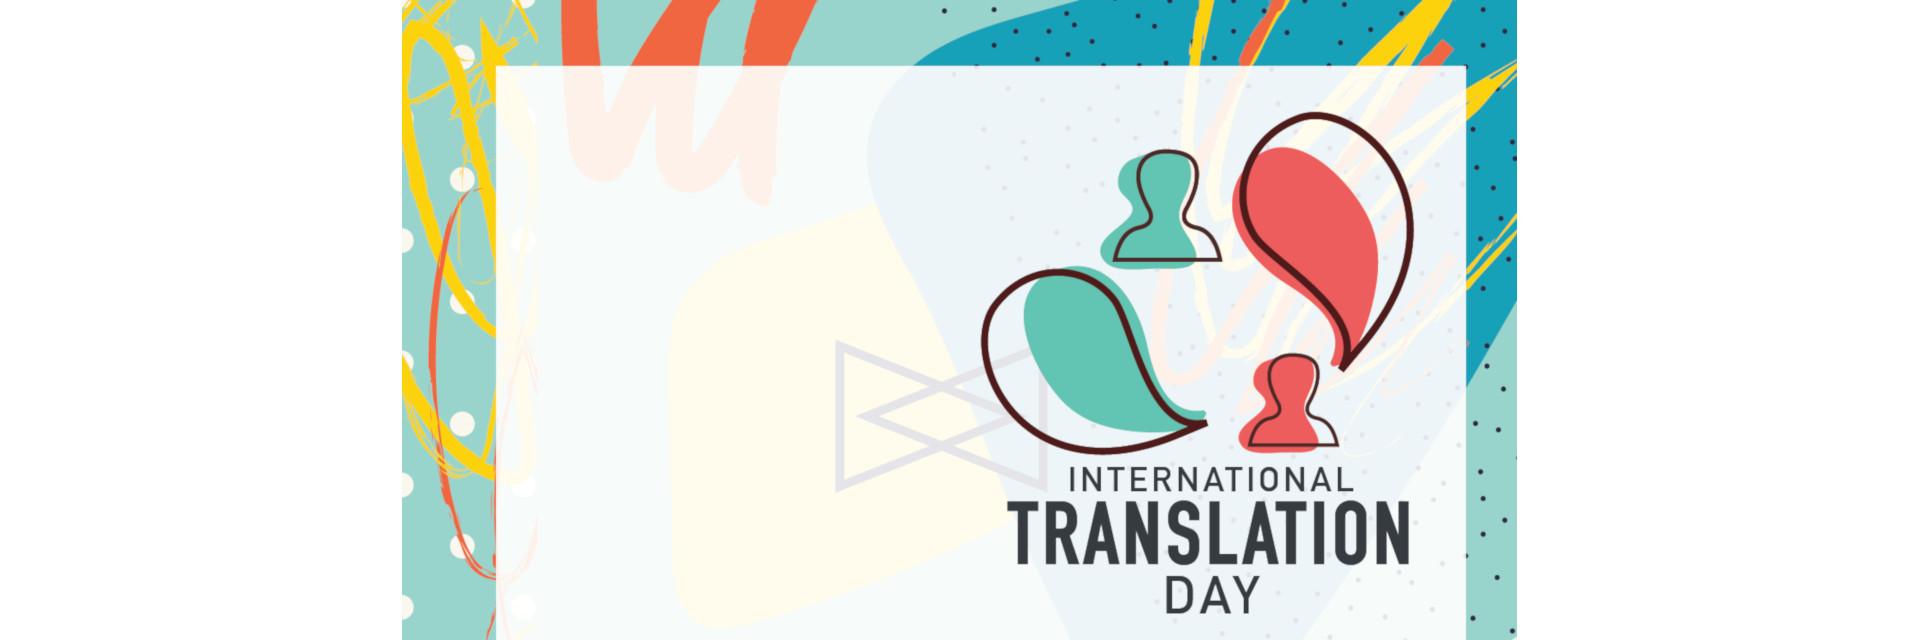 ECA celebrates international translation day 2021.